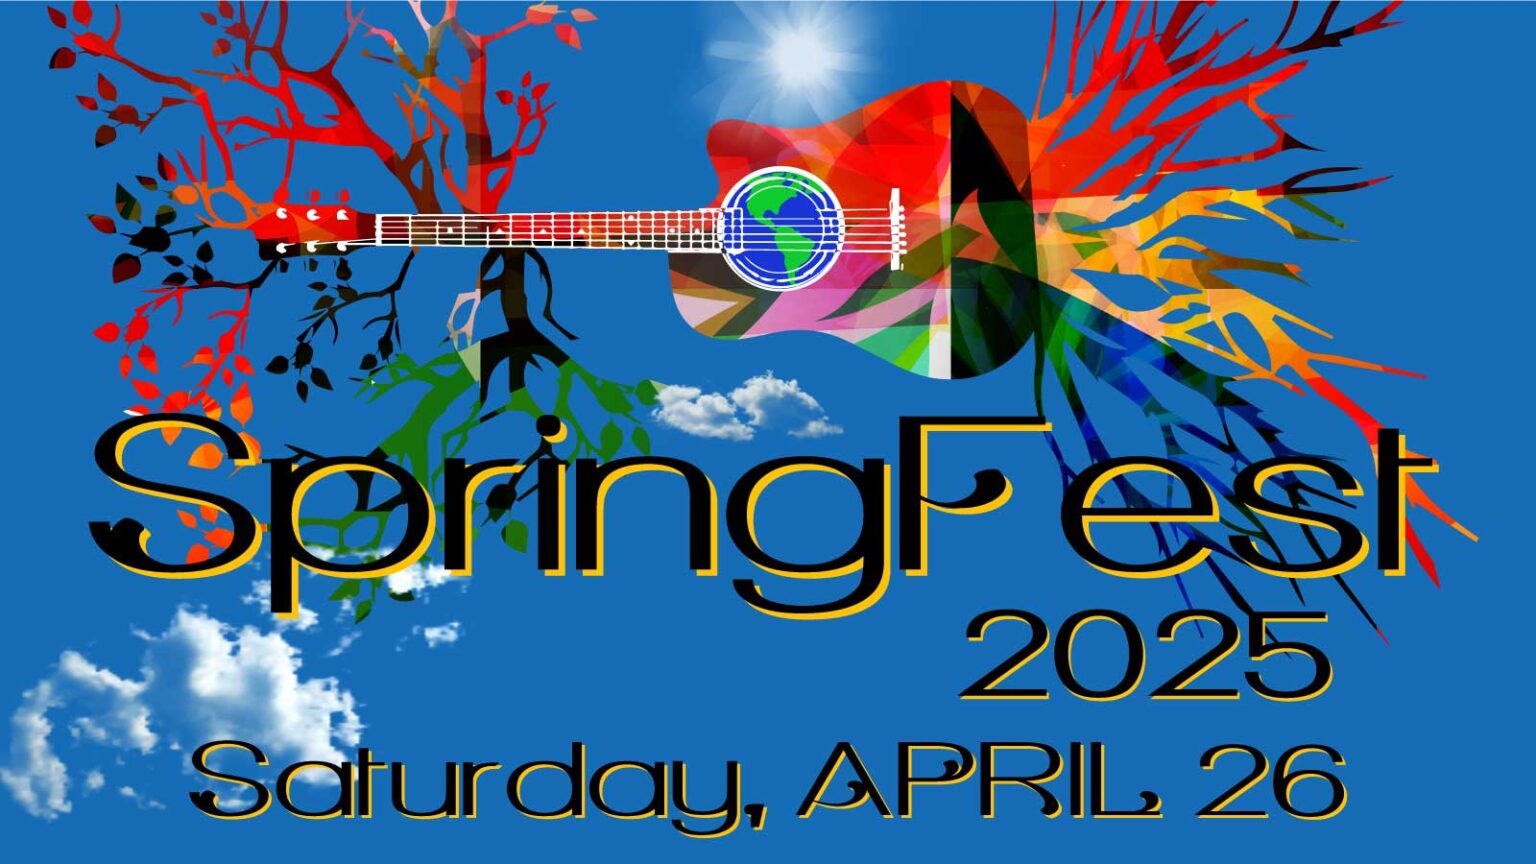 Springfest 2025 In Old Ellicott City Live Music April 26, 2025